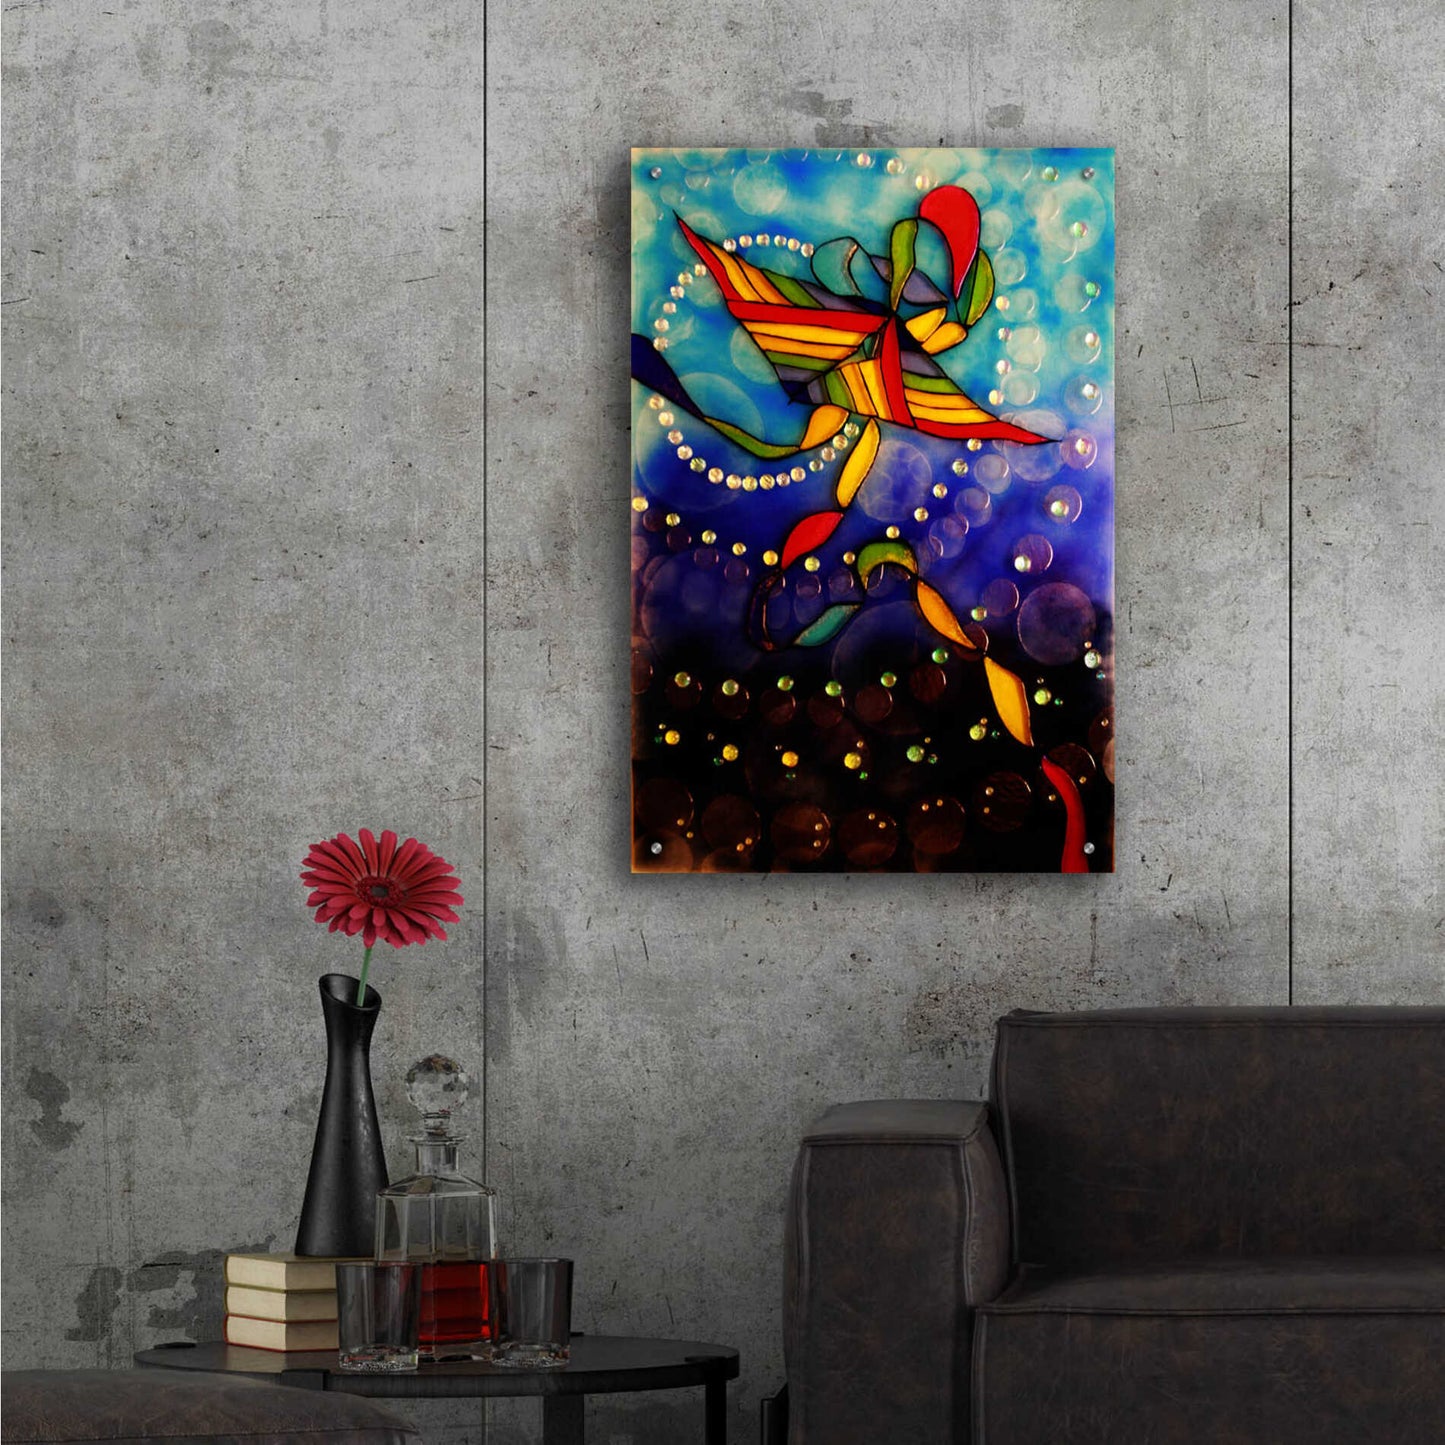 Epic Art 'Kite Reflected' by Rita Shimelfarb, Acrylic Glass Wall Art,24x36